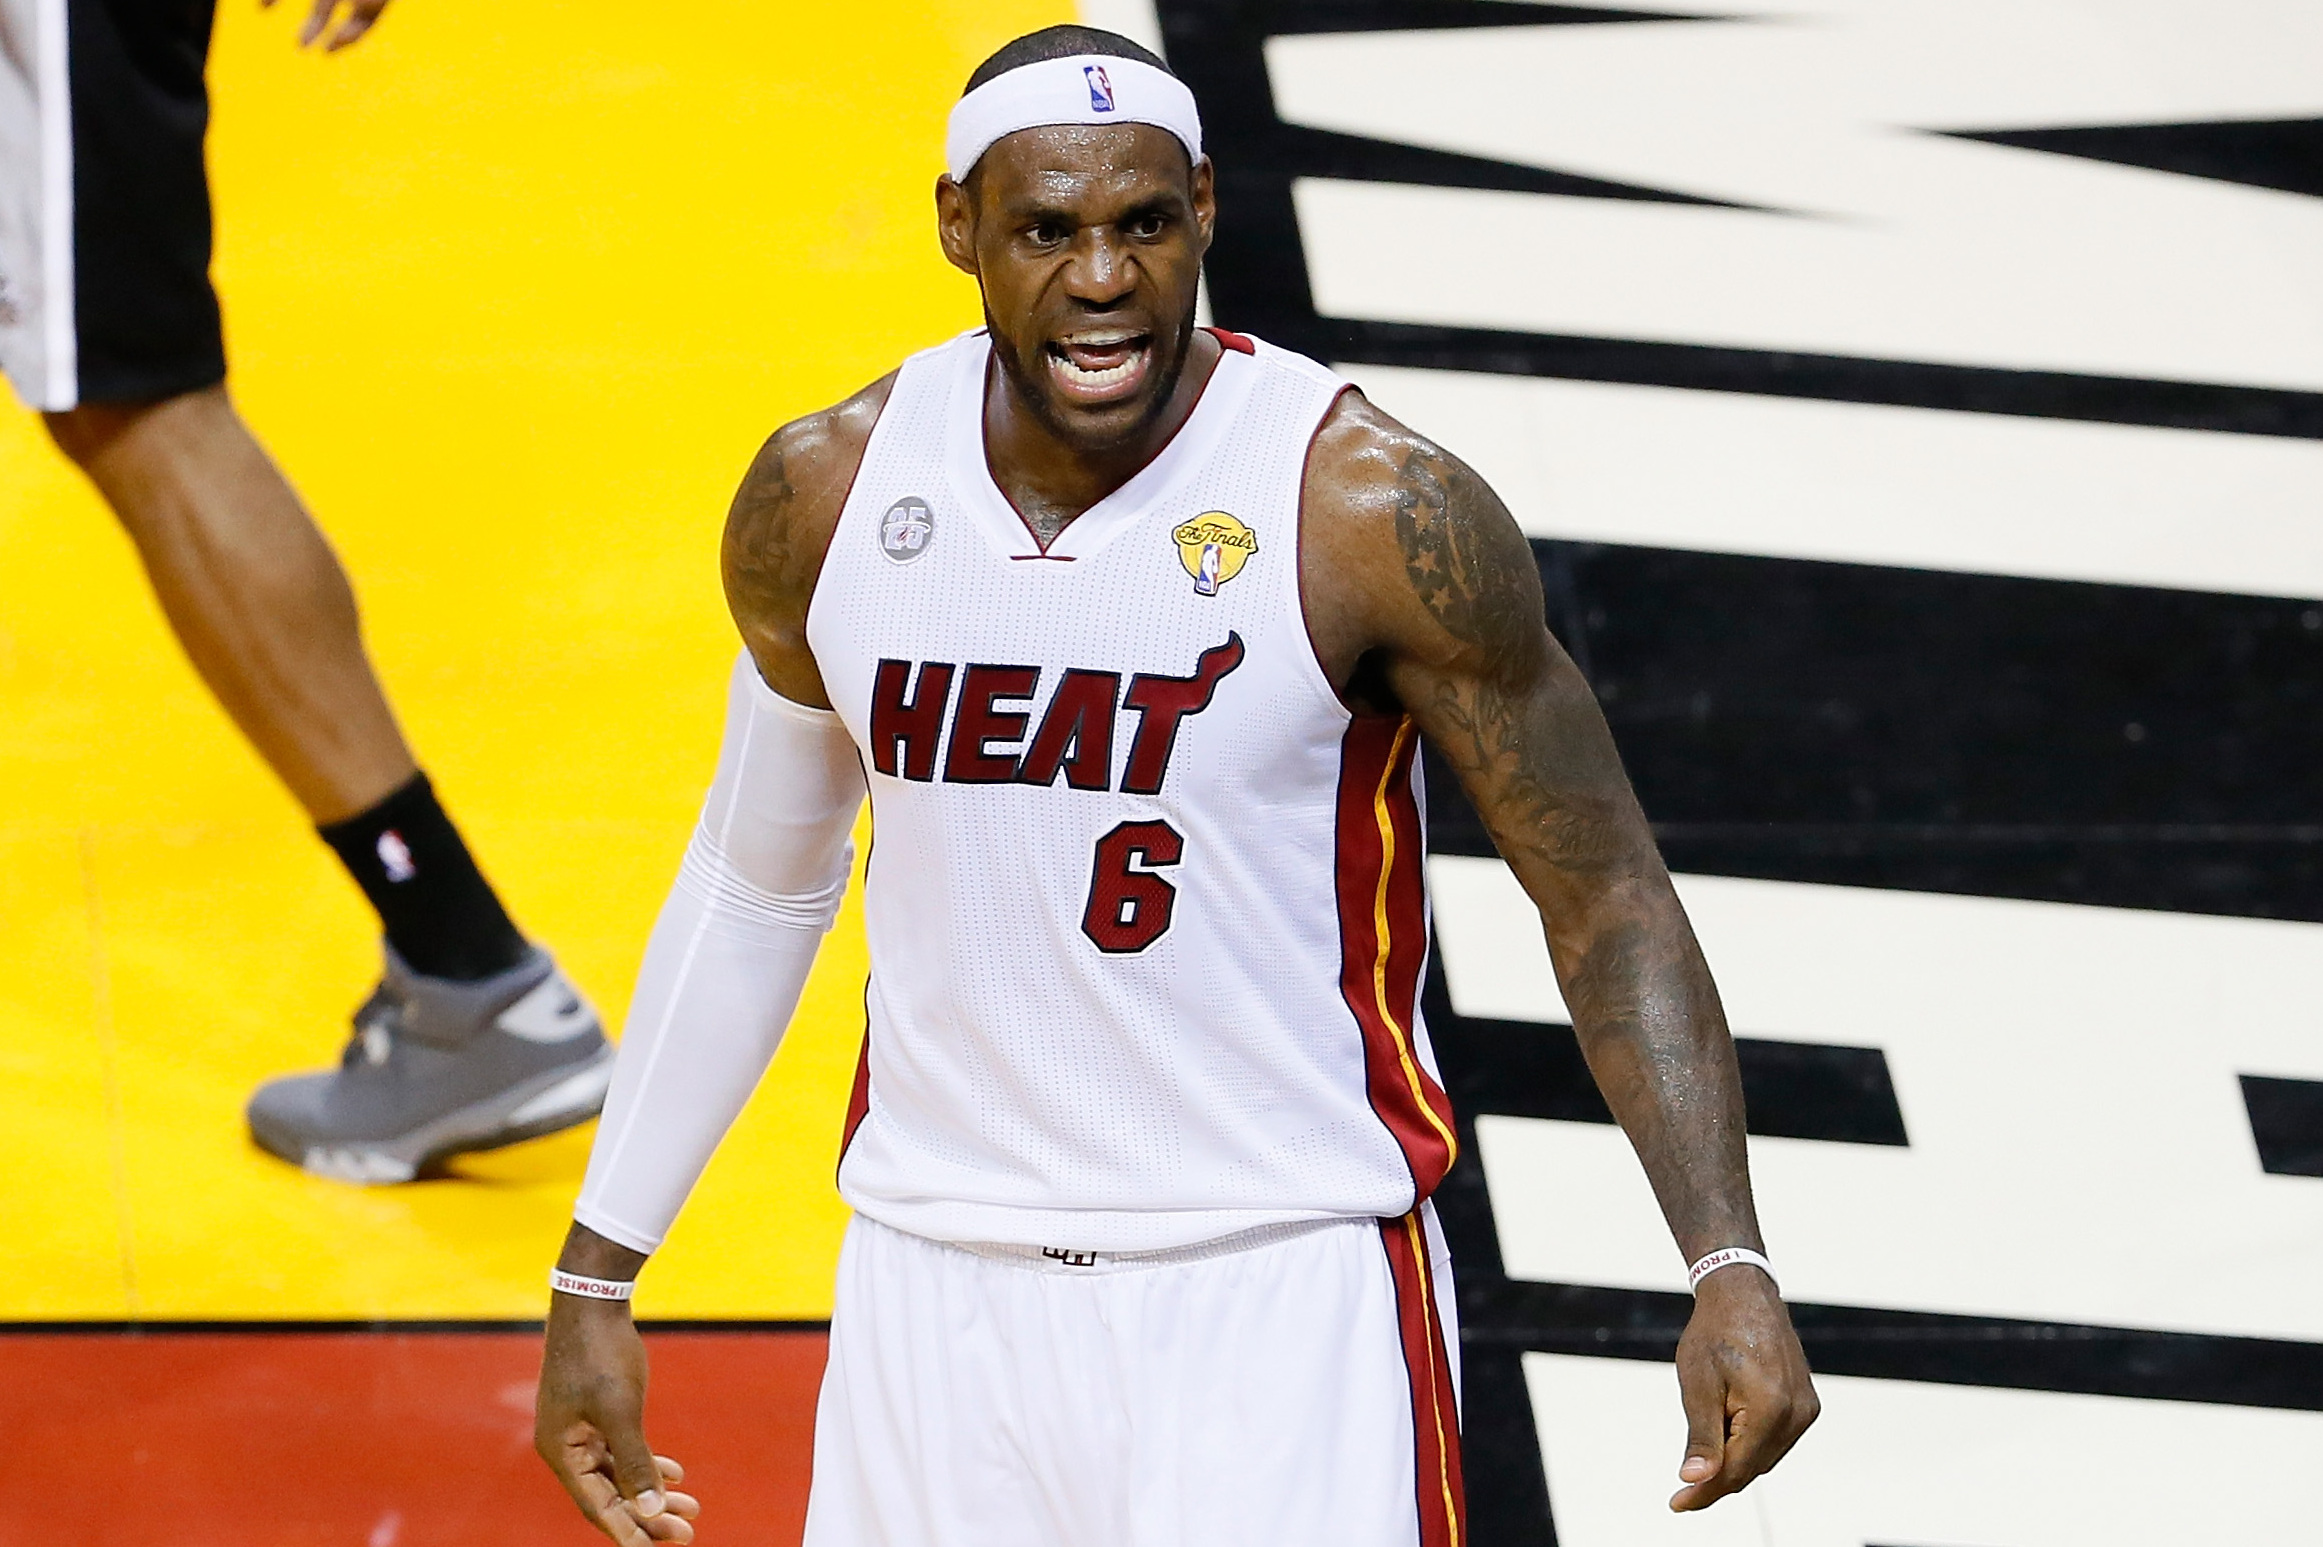 FULL GAME] San Antonio Spurs vs. Miami Heat, 2013 NBA Finals Game 6